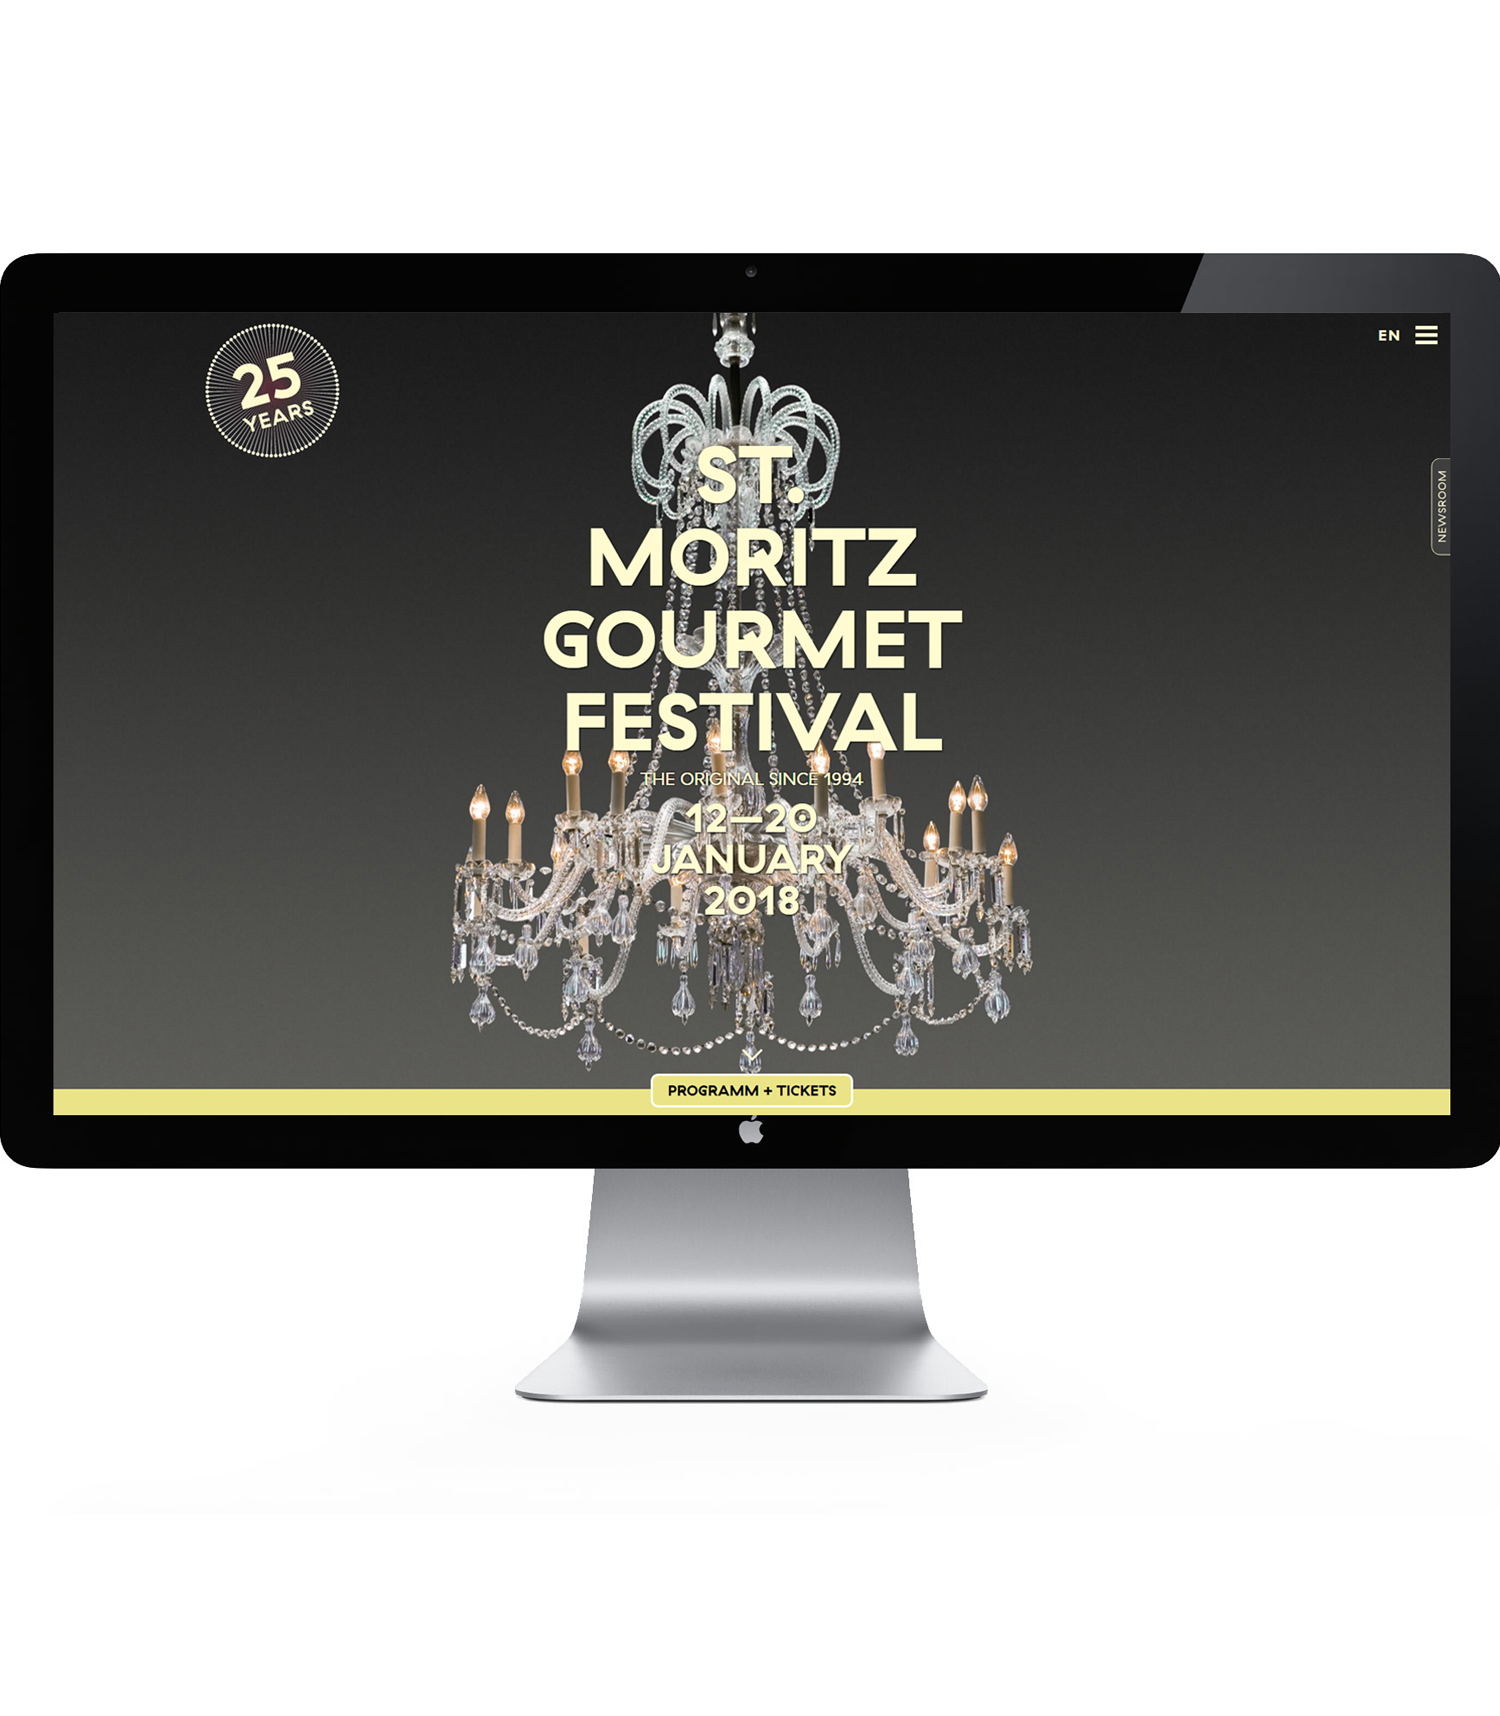 St. Moritz Gourmet Festival - Neues CI/CD, neue Website